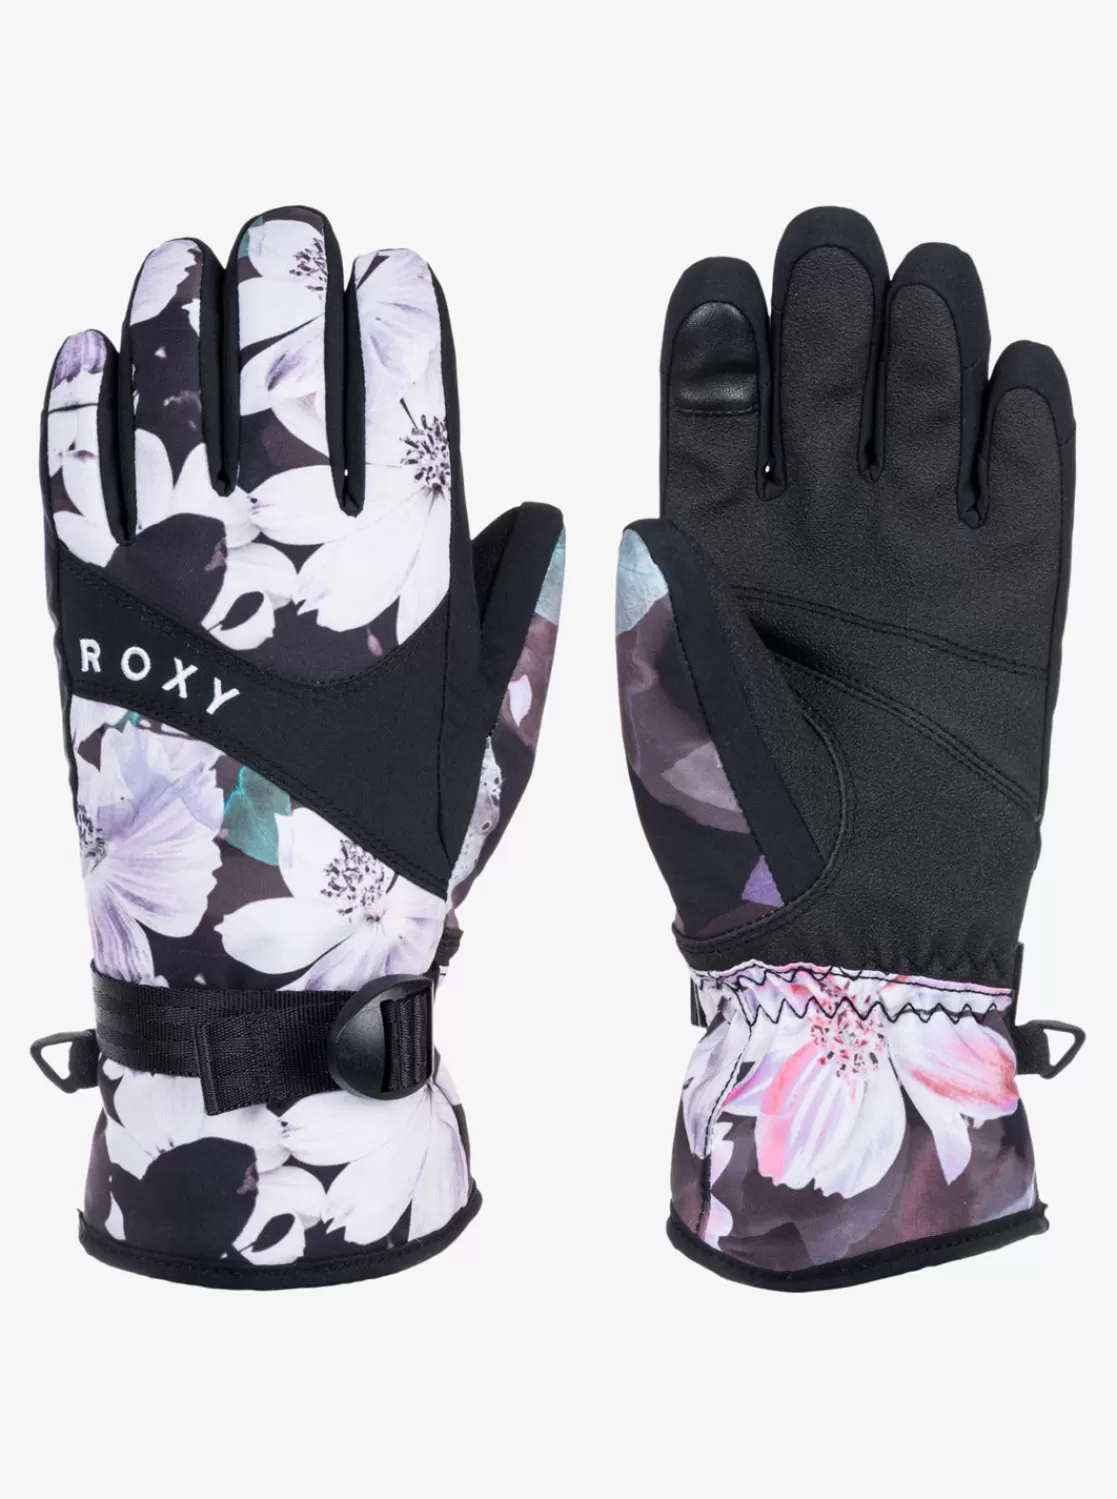 Girls 4-16 Jetty Technical Snowboard/Ski Gloves-ROXY Clearance